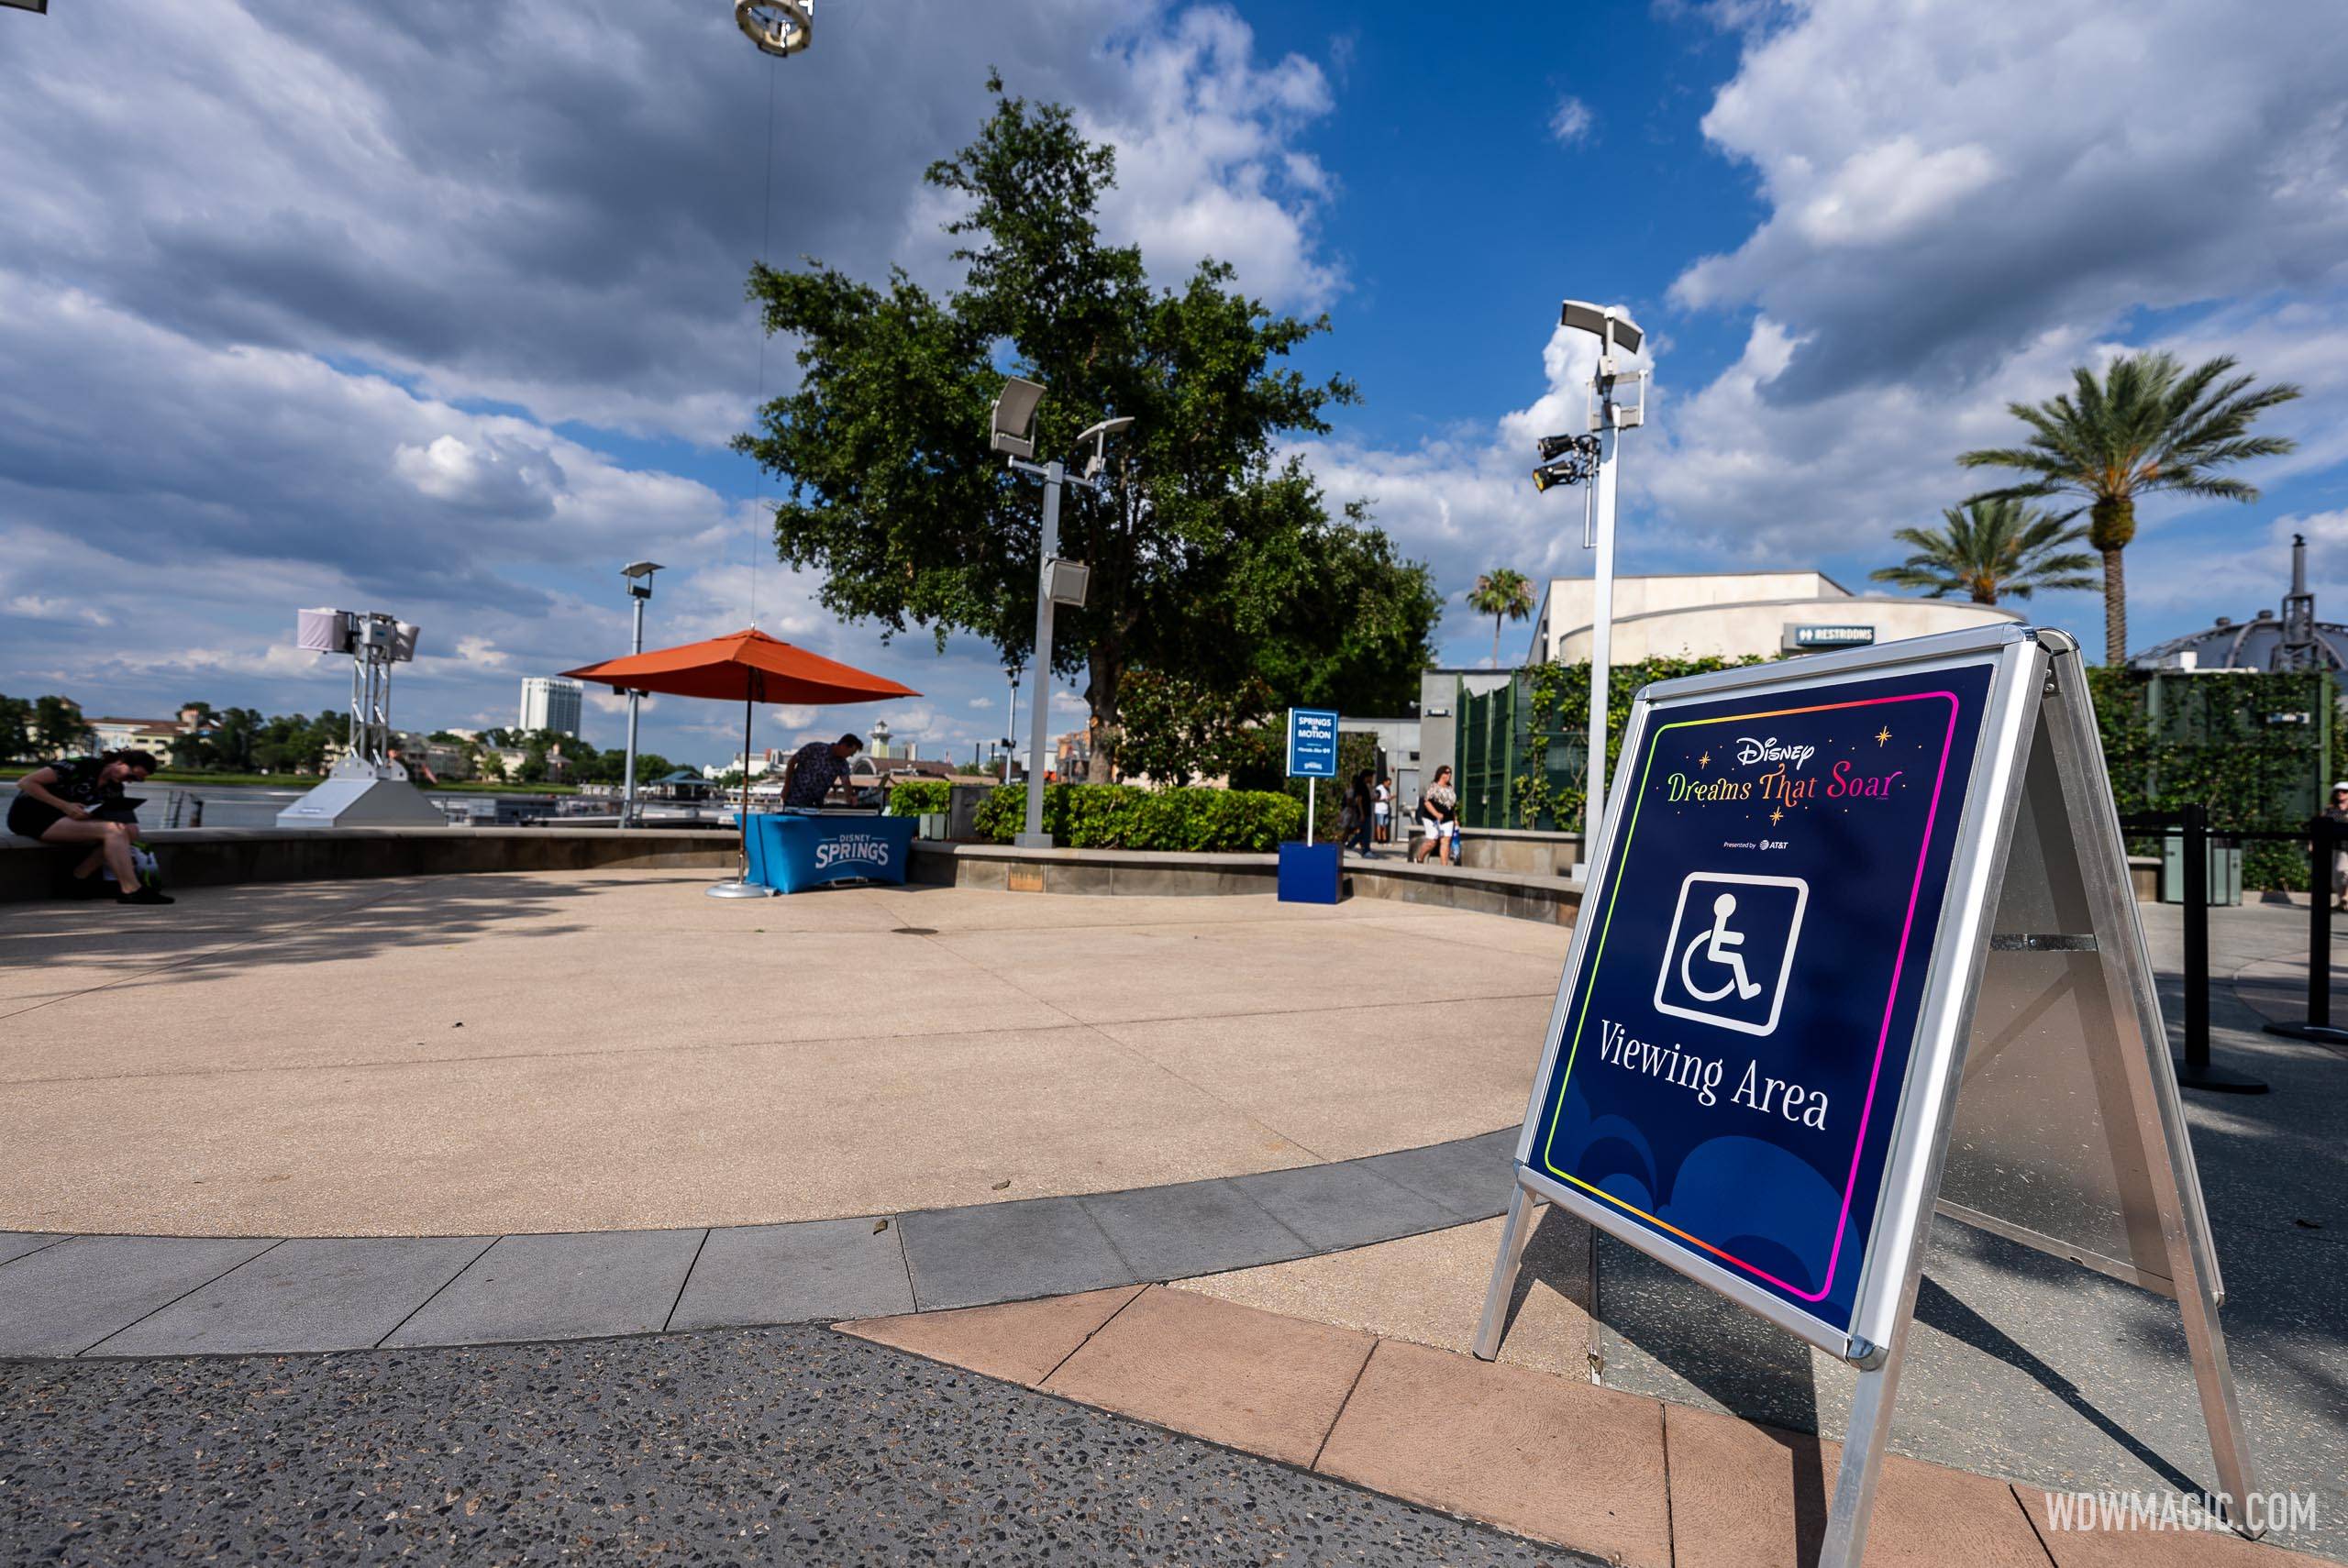 Disney Dreams That Soar wheelchair entrance in Food Truck Park